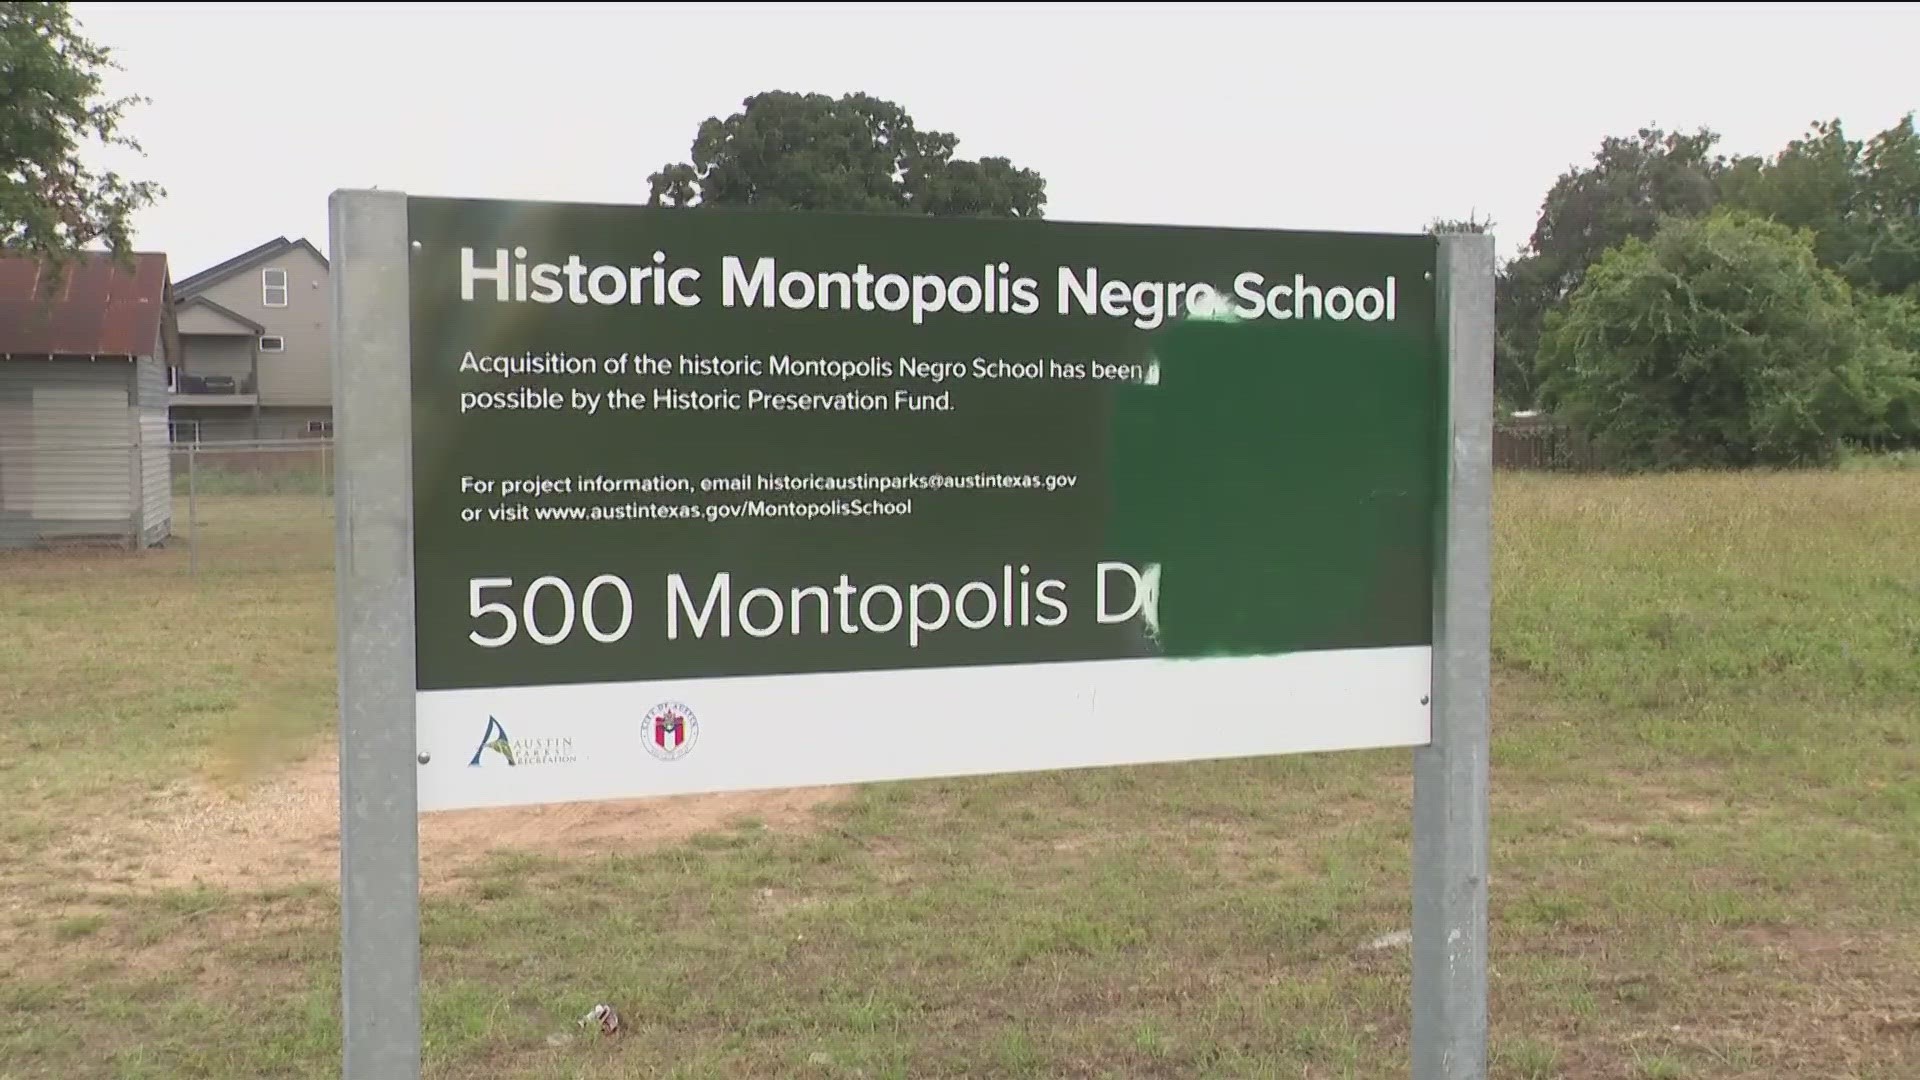 The Montopolis Negro School is a segregation-era school that closed in 1962.